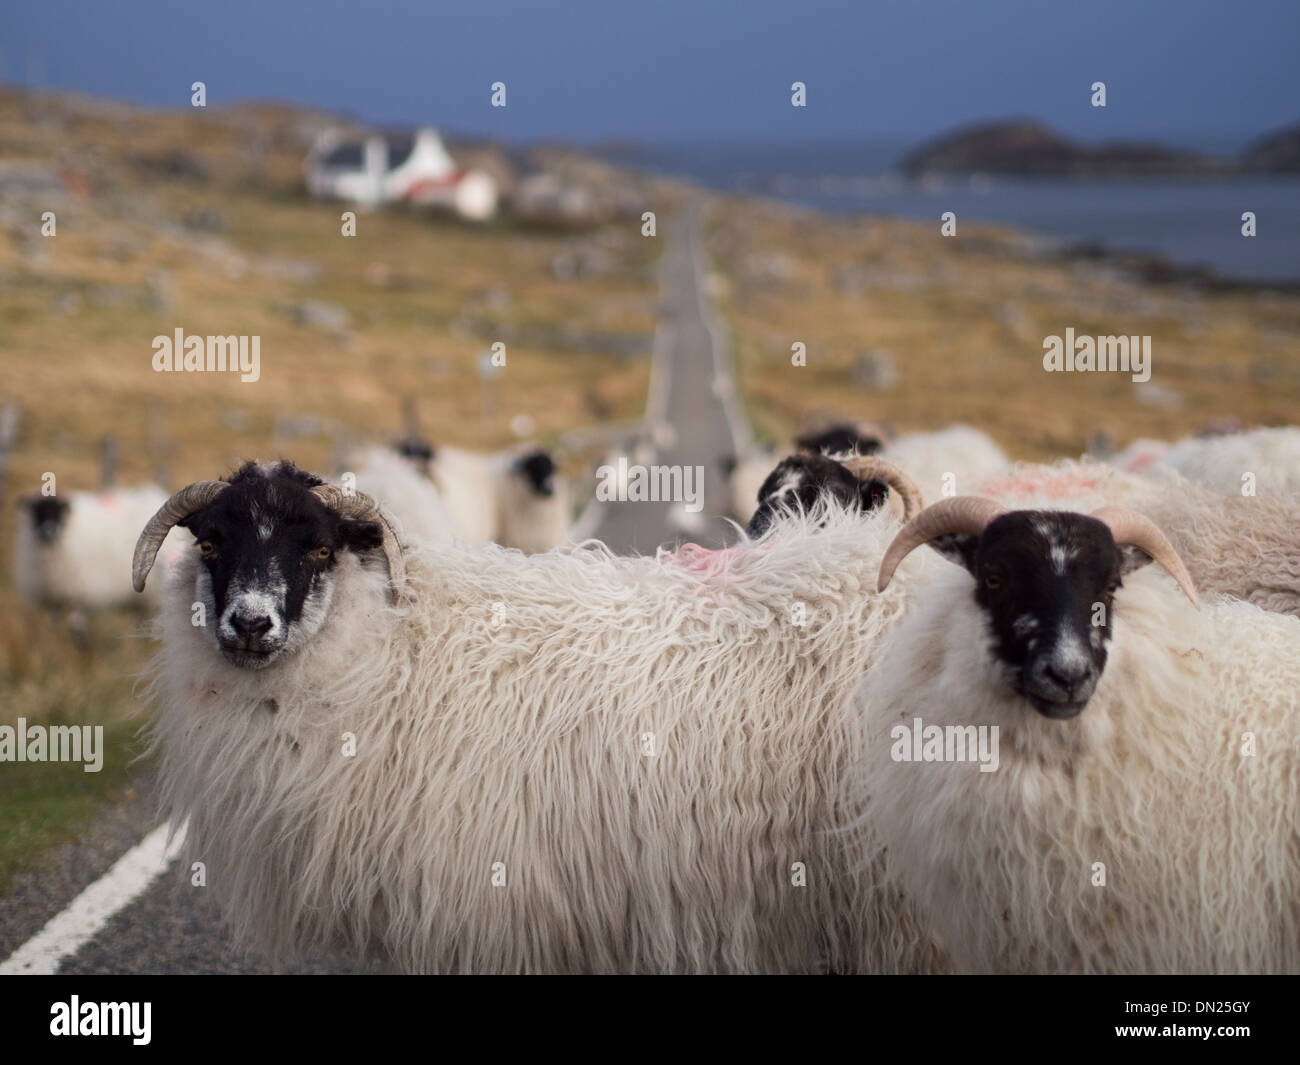 Sheep on Road, Isle of Harris, Scotland Stock Photo